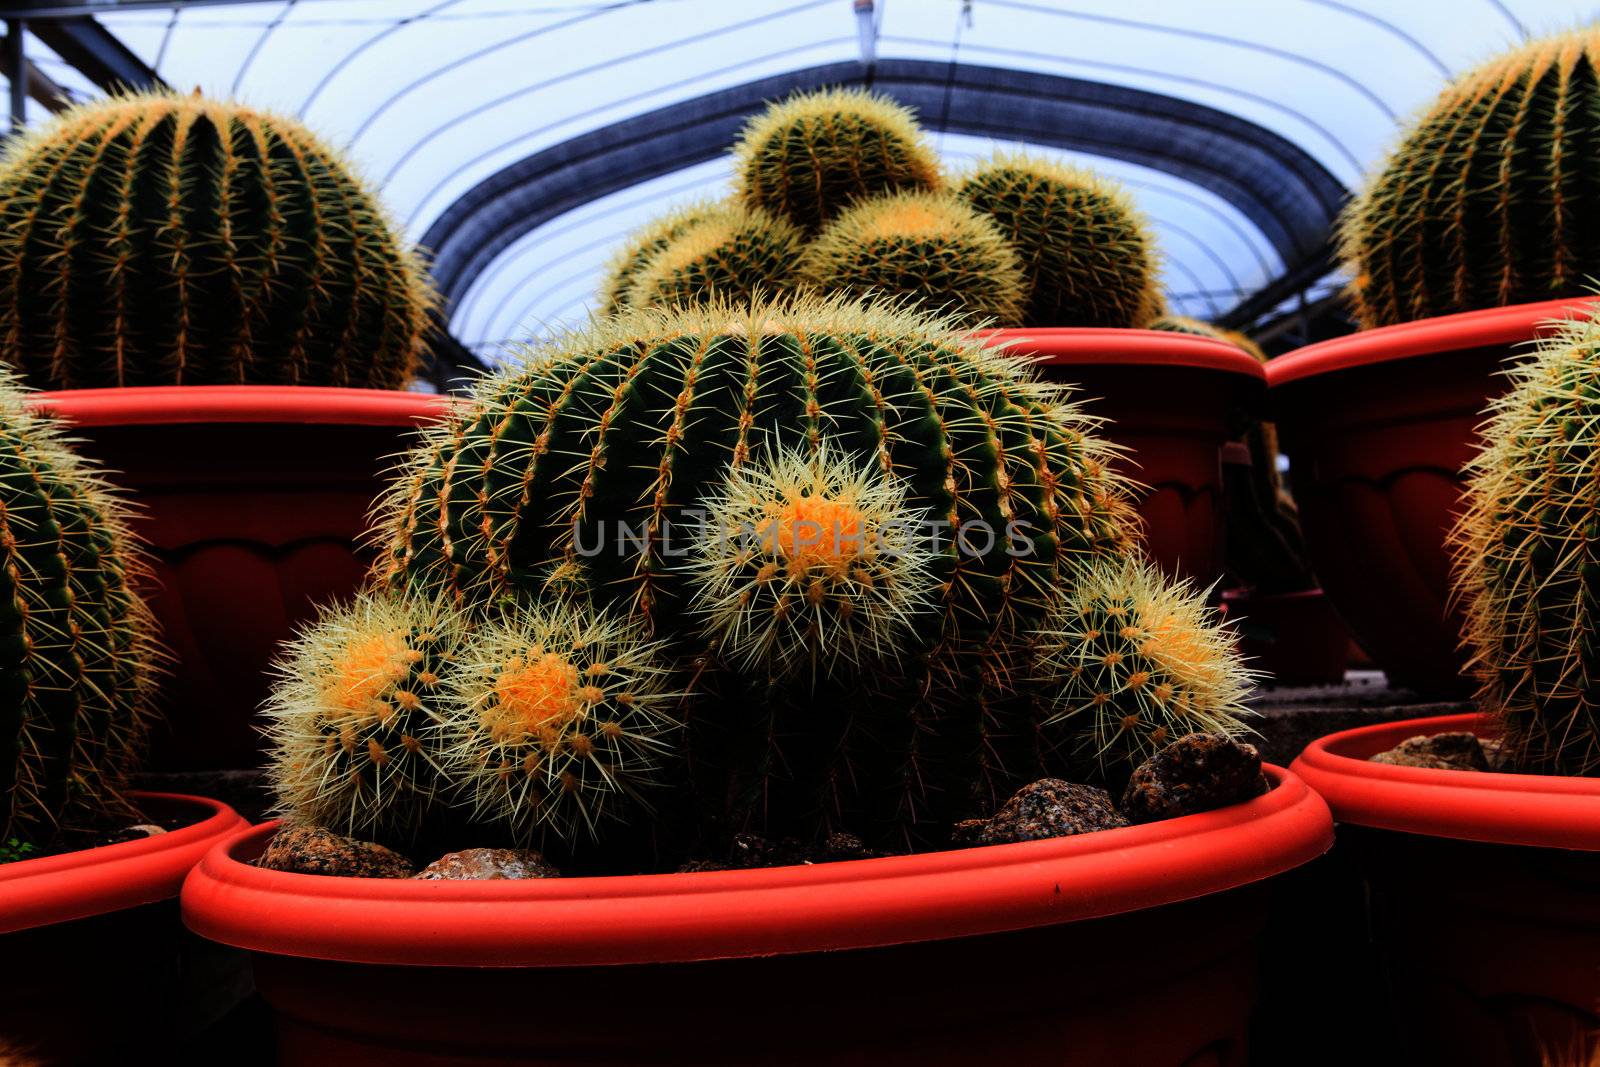 Cactus, extreme closeup  by thanomphong